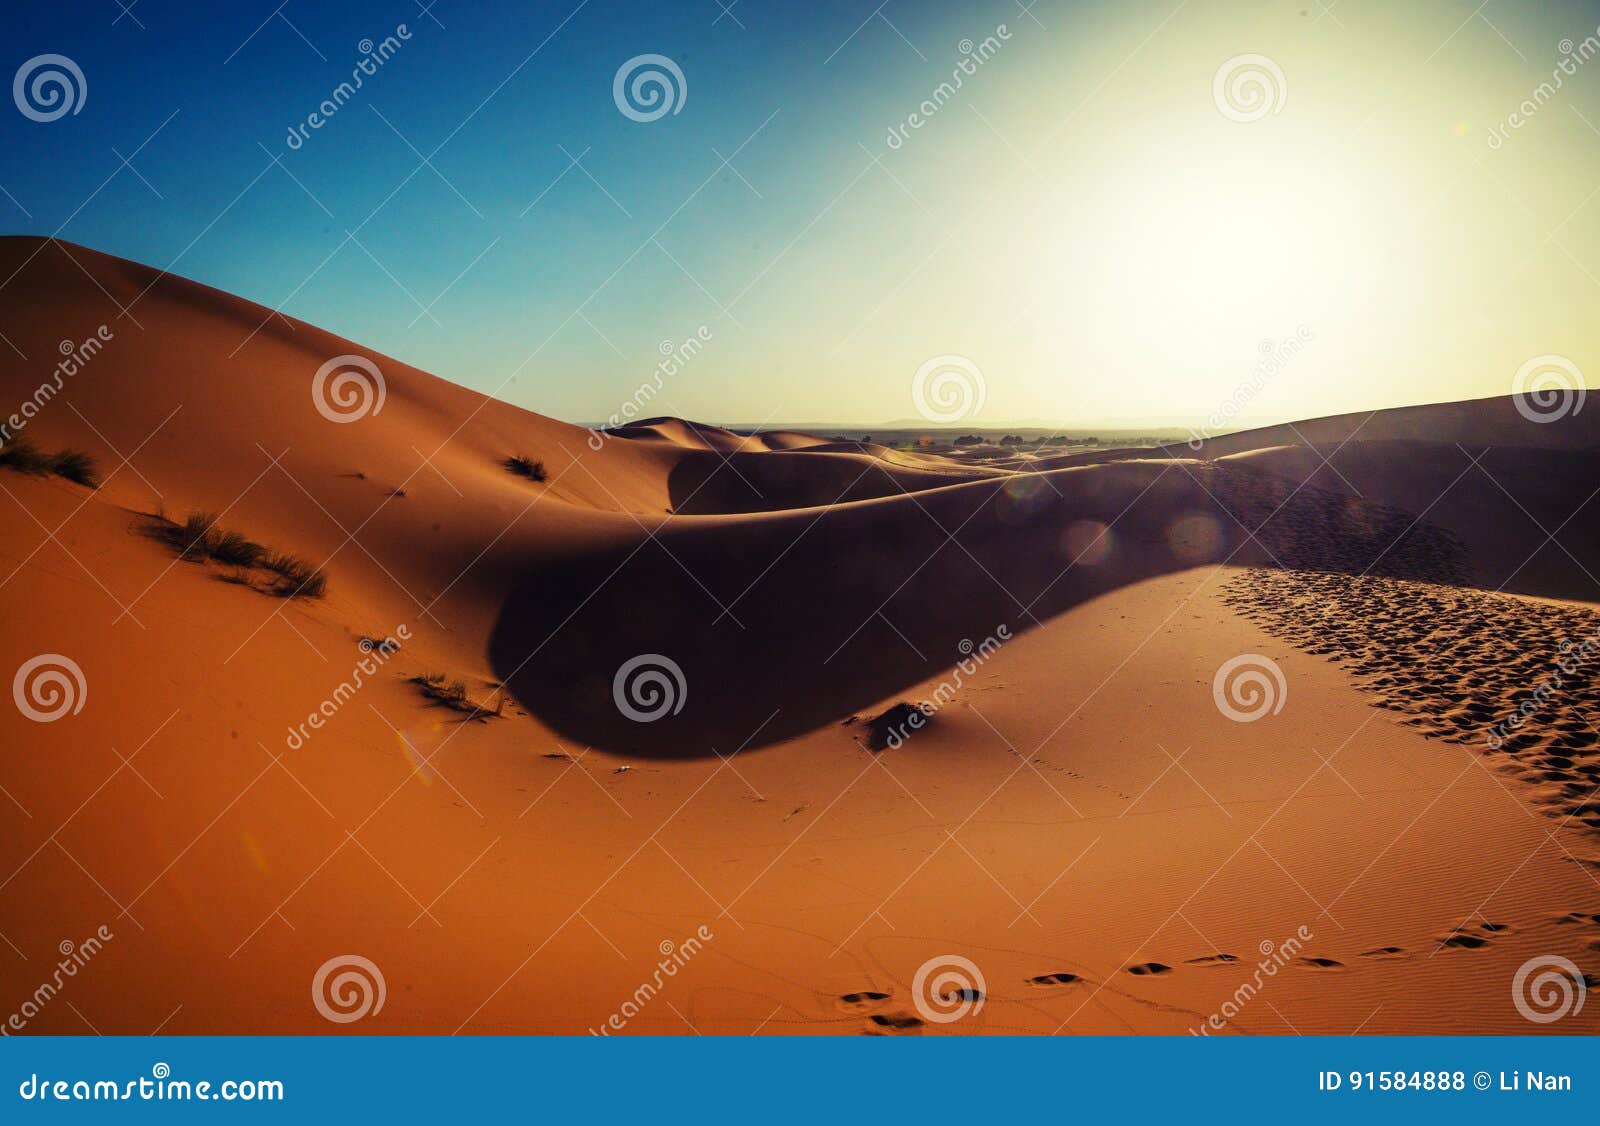 sun light sahara desert